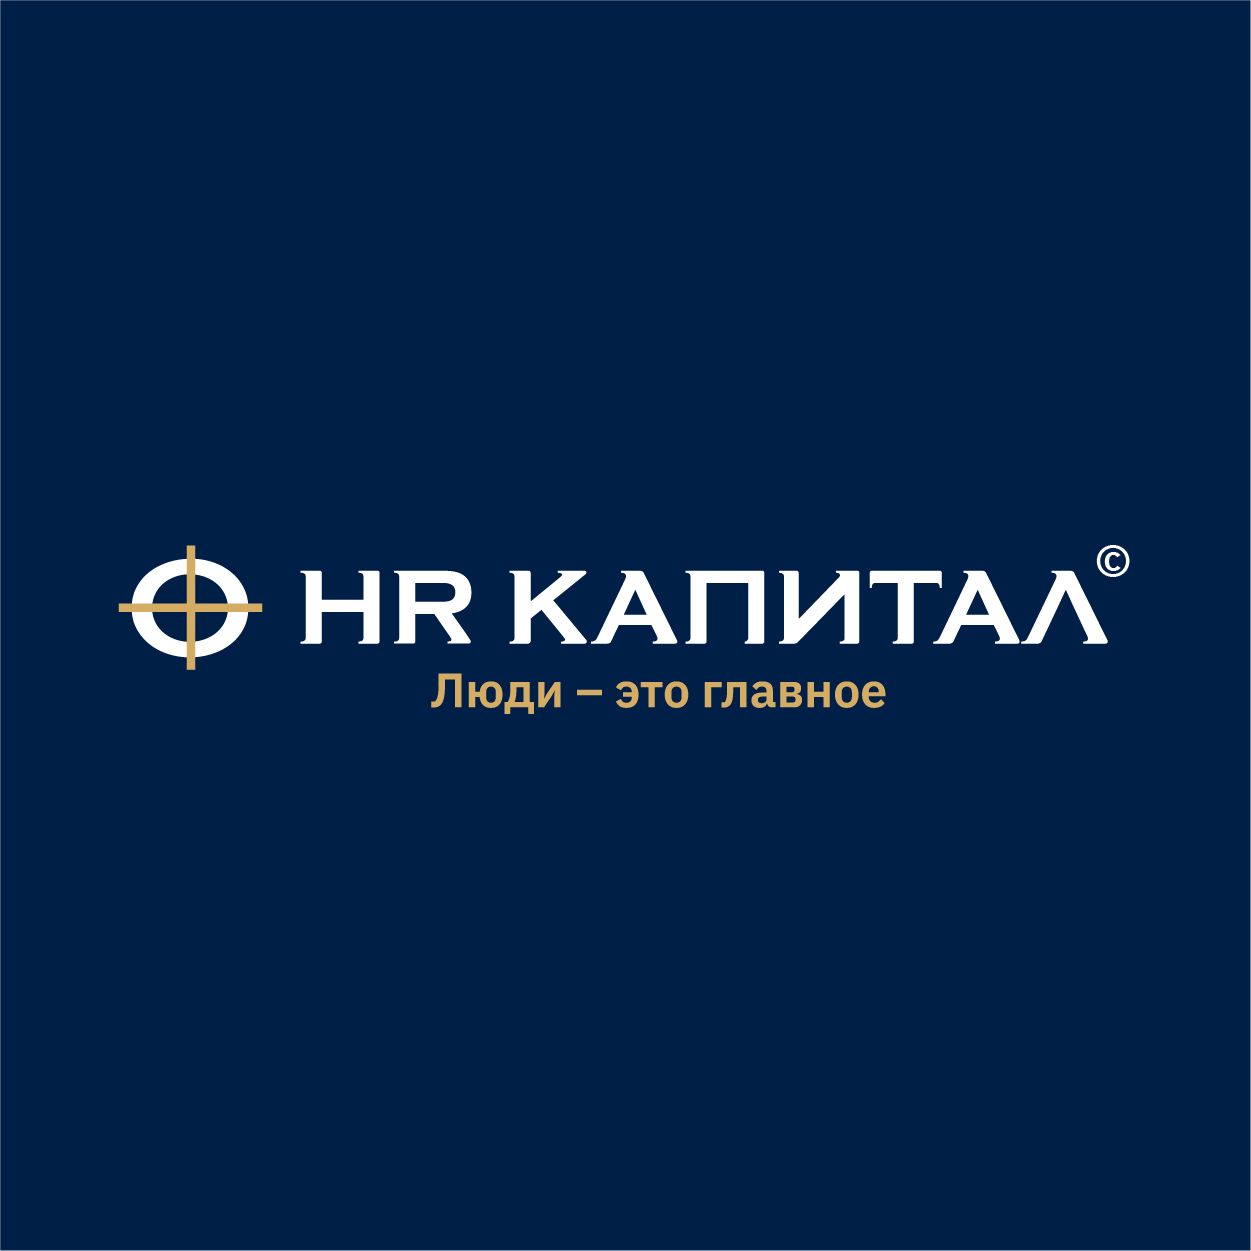 Логотип компании HR Капитал